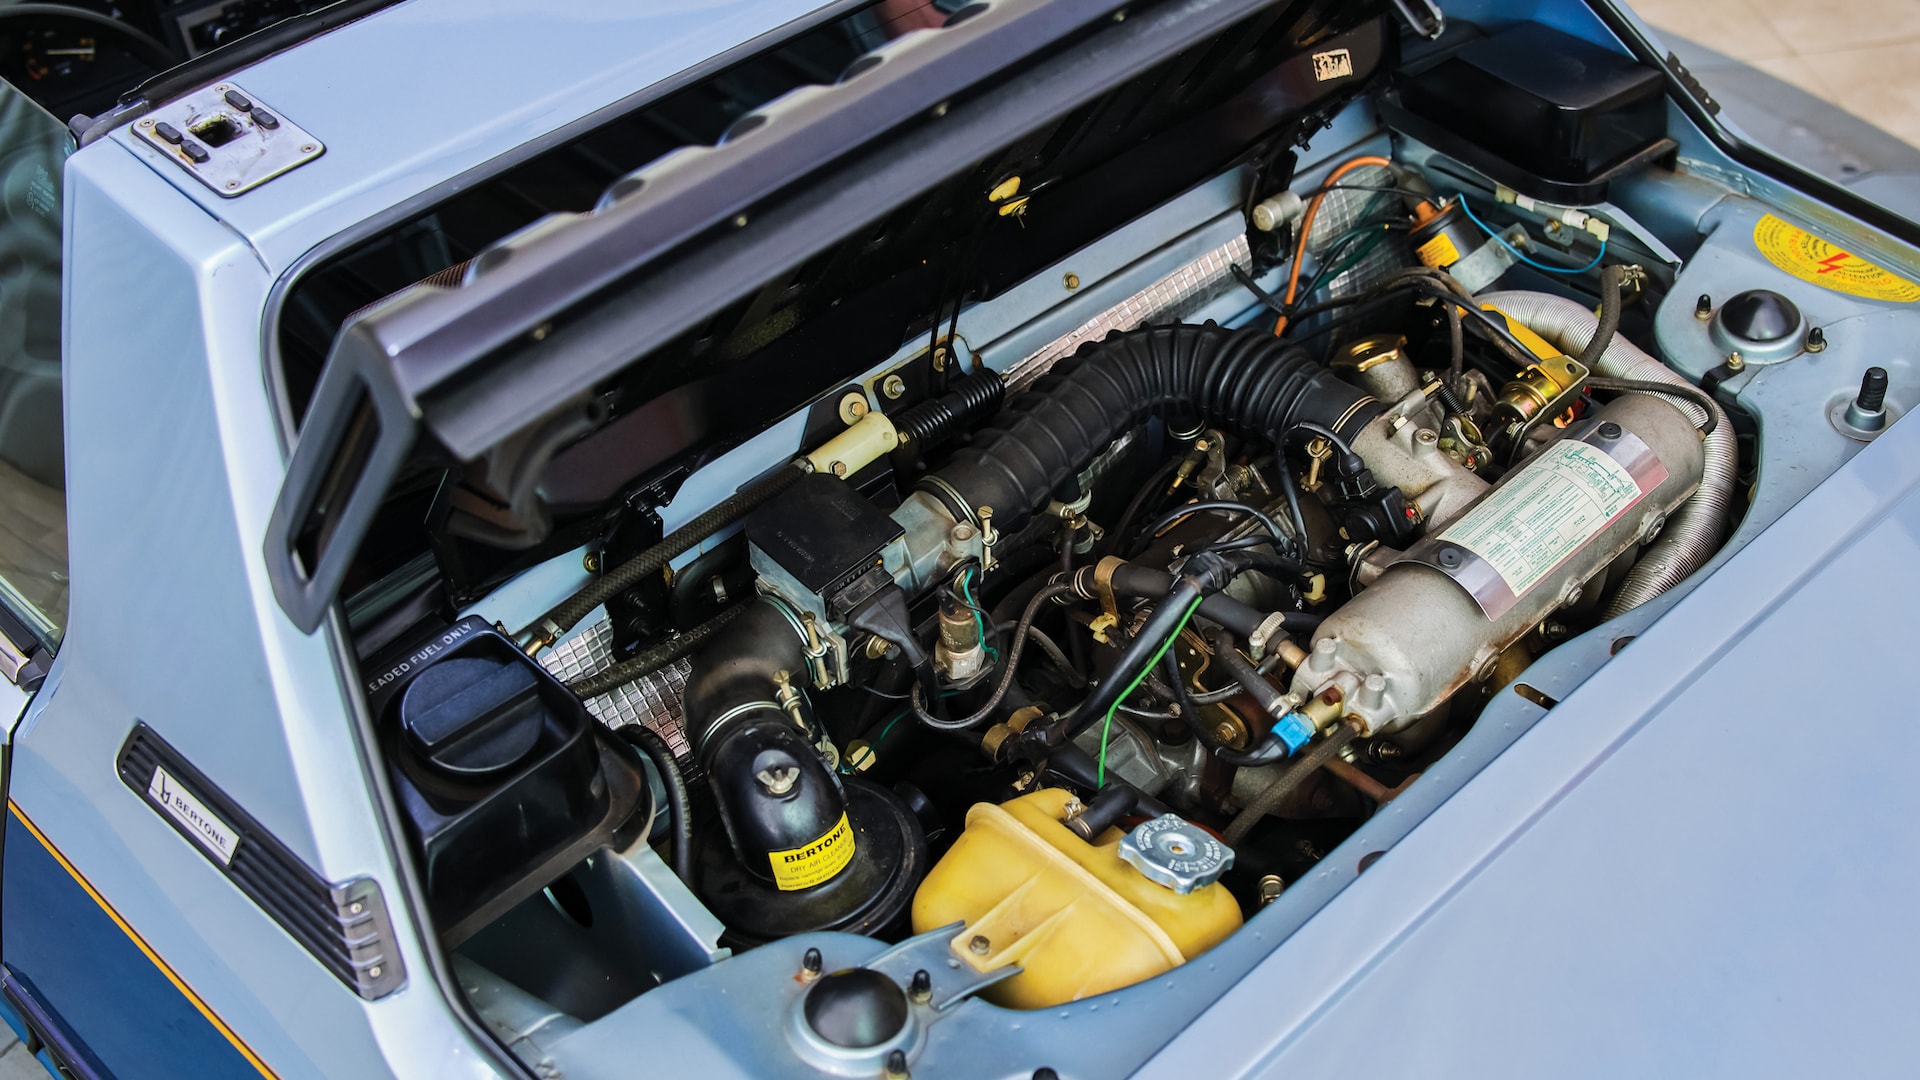 1986 Bertone Fiat X1_9 engine